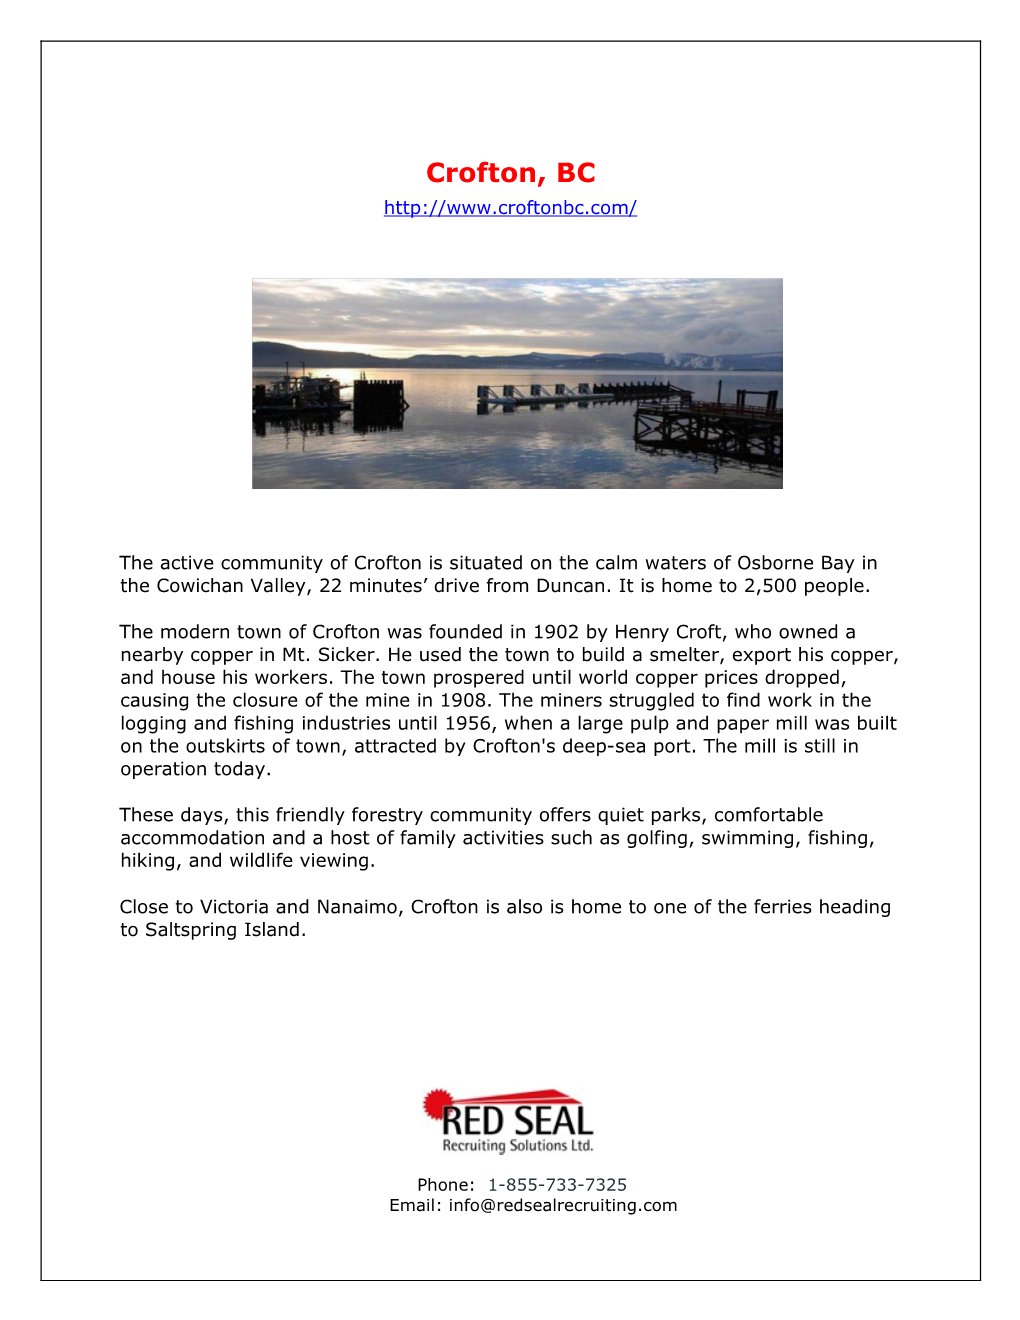 Crofton, BC, Canada | Red Seal Recruiting